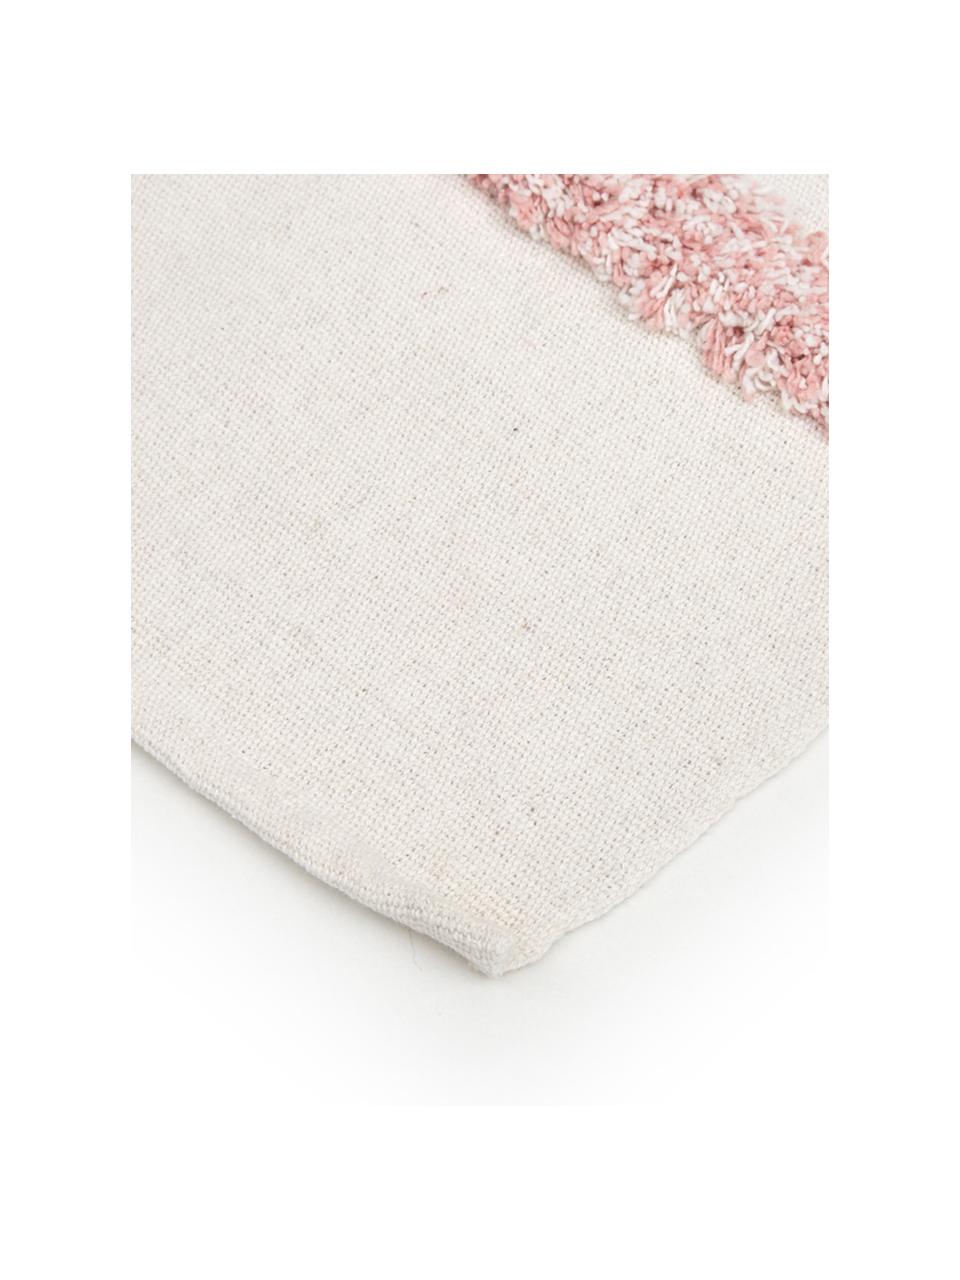 Plaid con motivo a rilievo Pimperlet, Cotone, Bianco latte, rosa, Larg. 125 x Lung. 150 cm